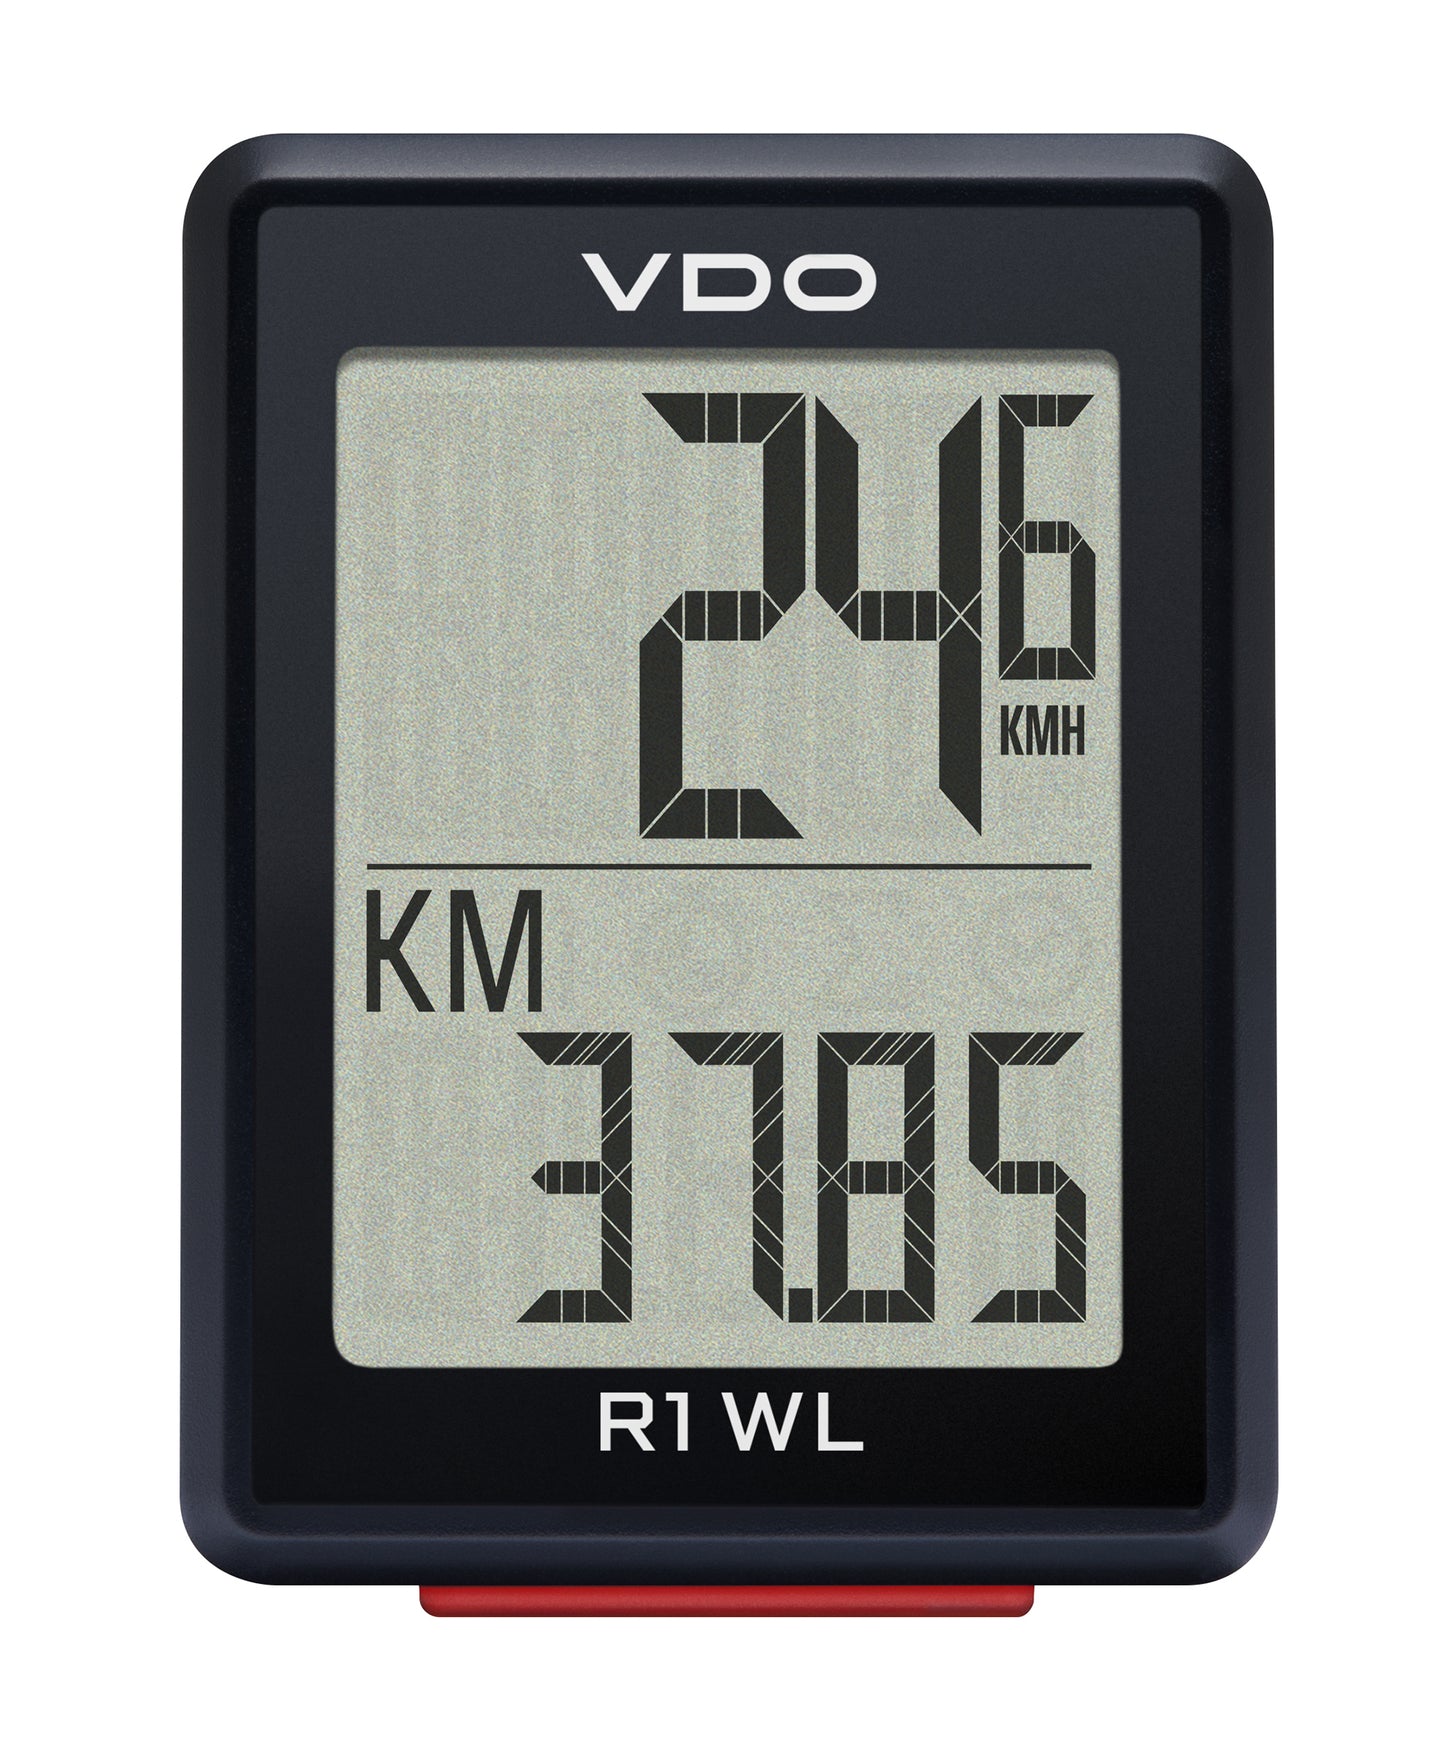 VDO Bicycle Computer R1 WL Wireless ATS